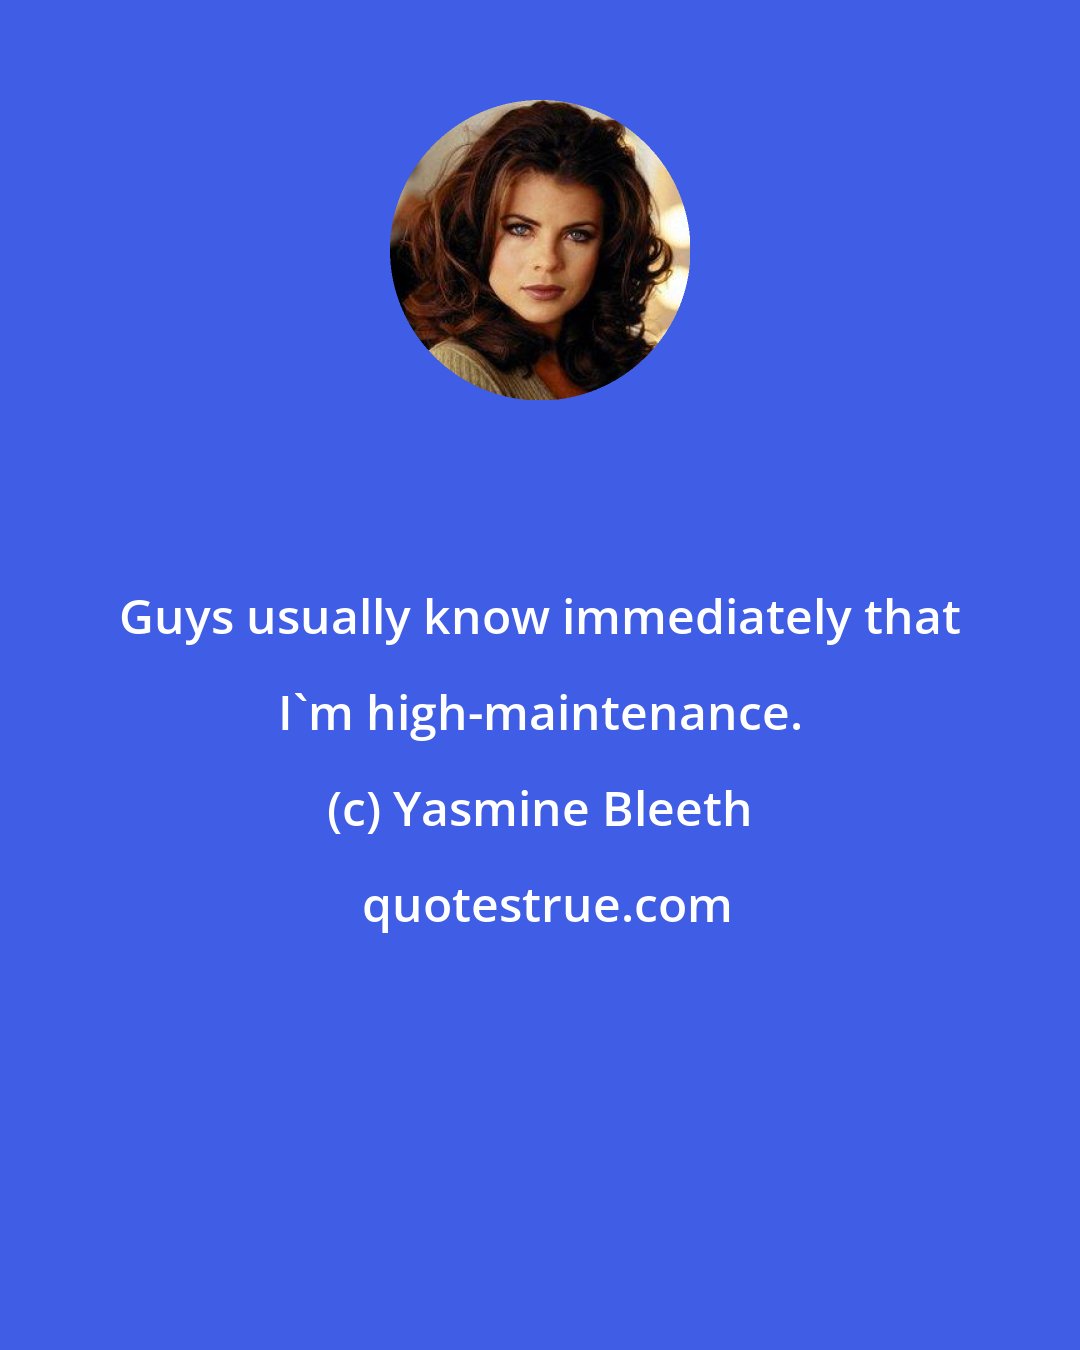 Yasmine Bleeth: Guys usually know immediately that I'm high-maintenance.